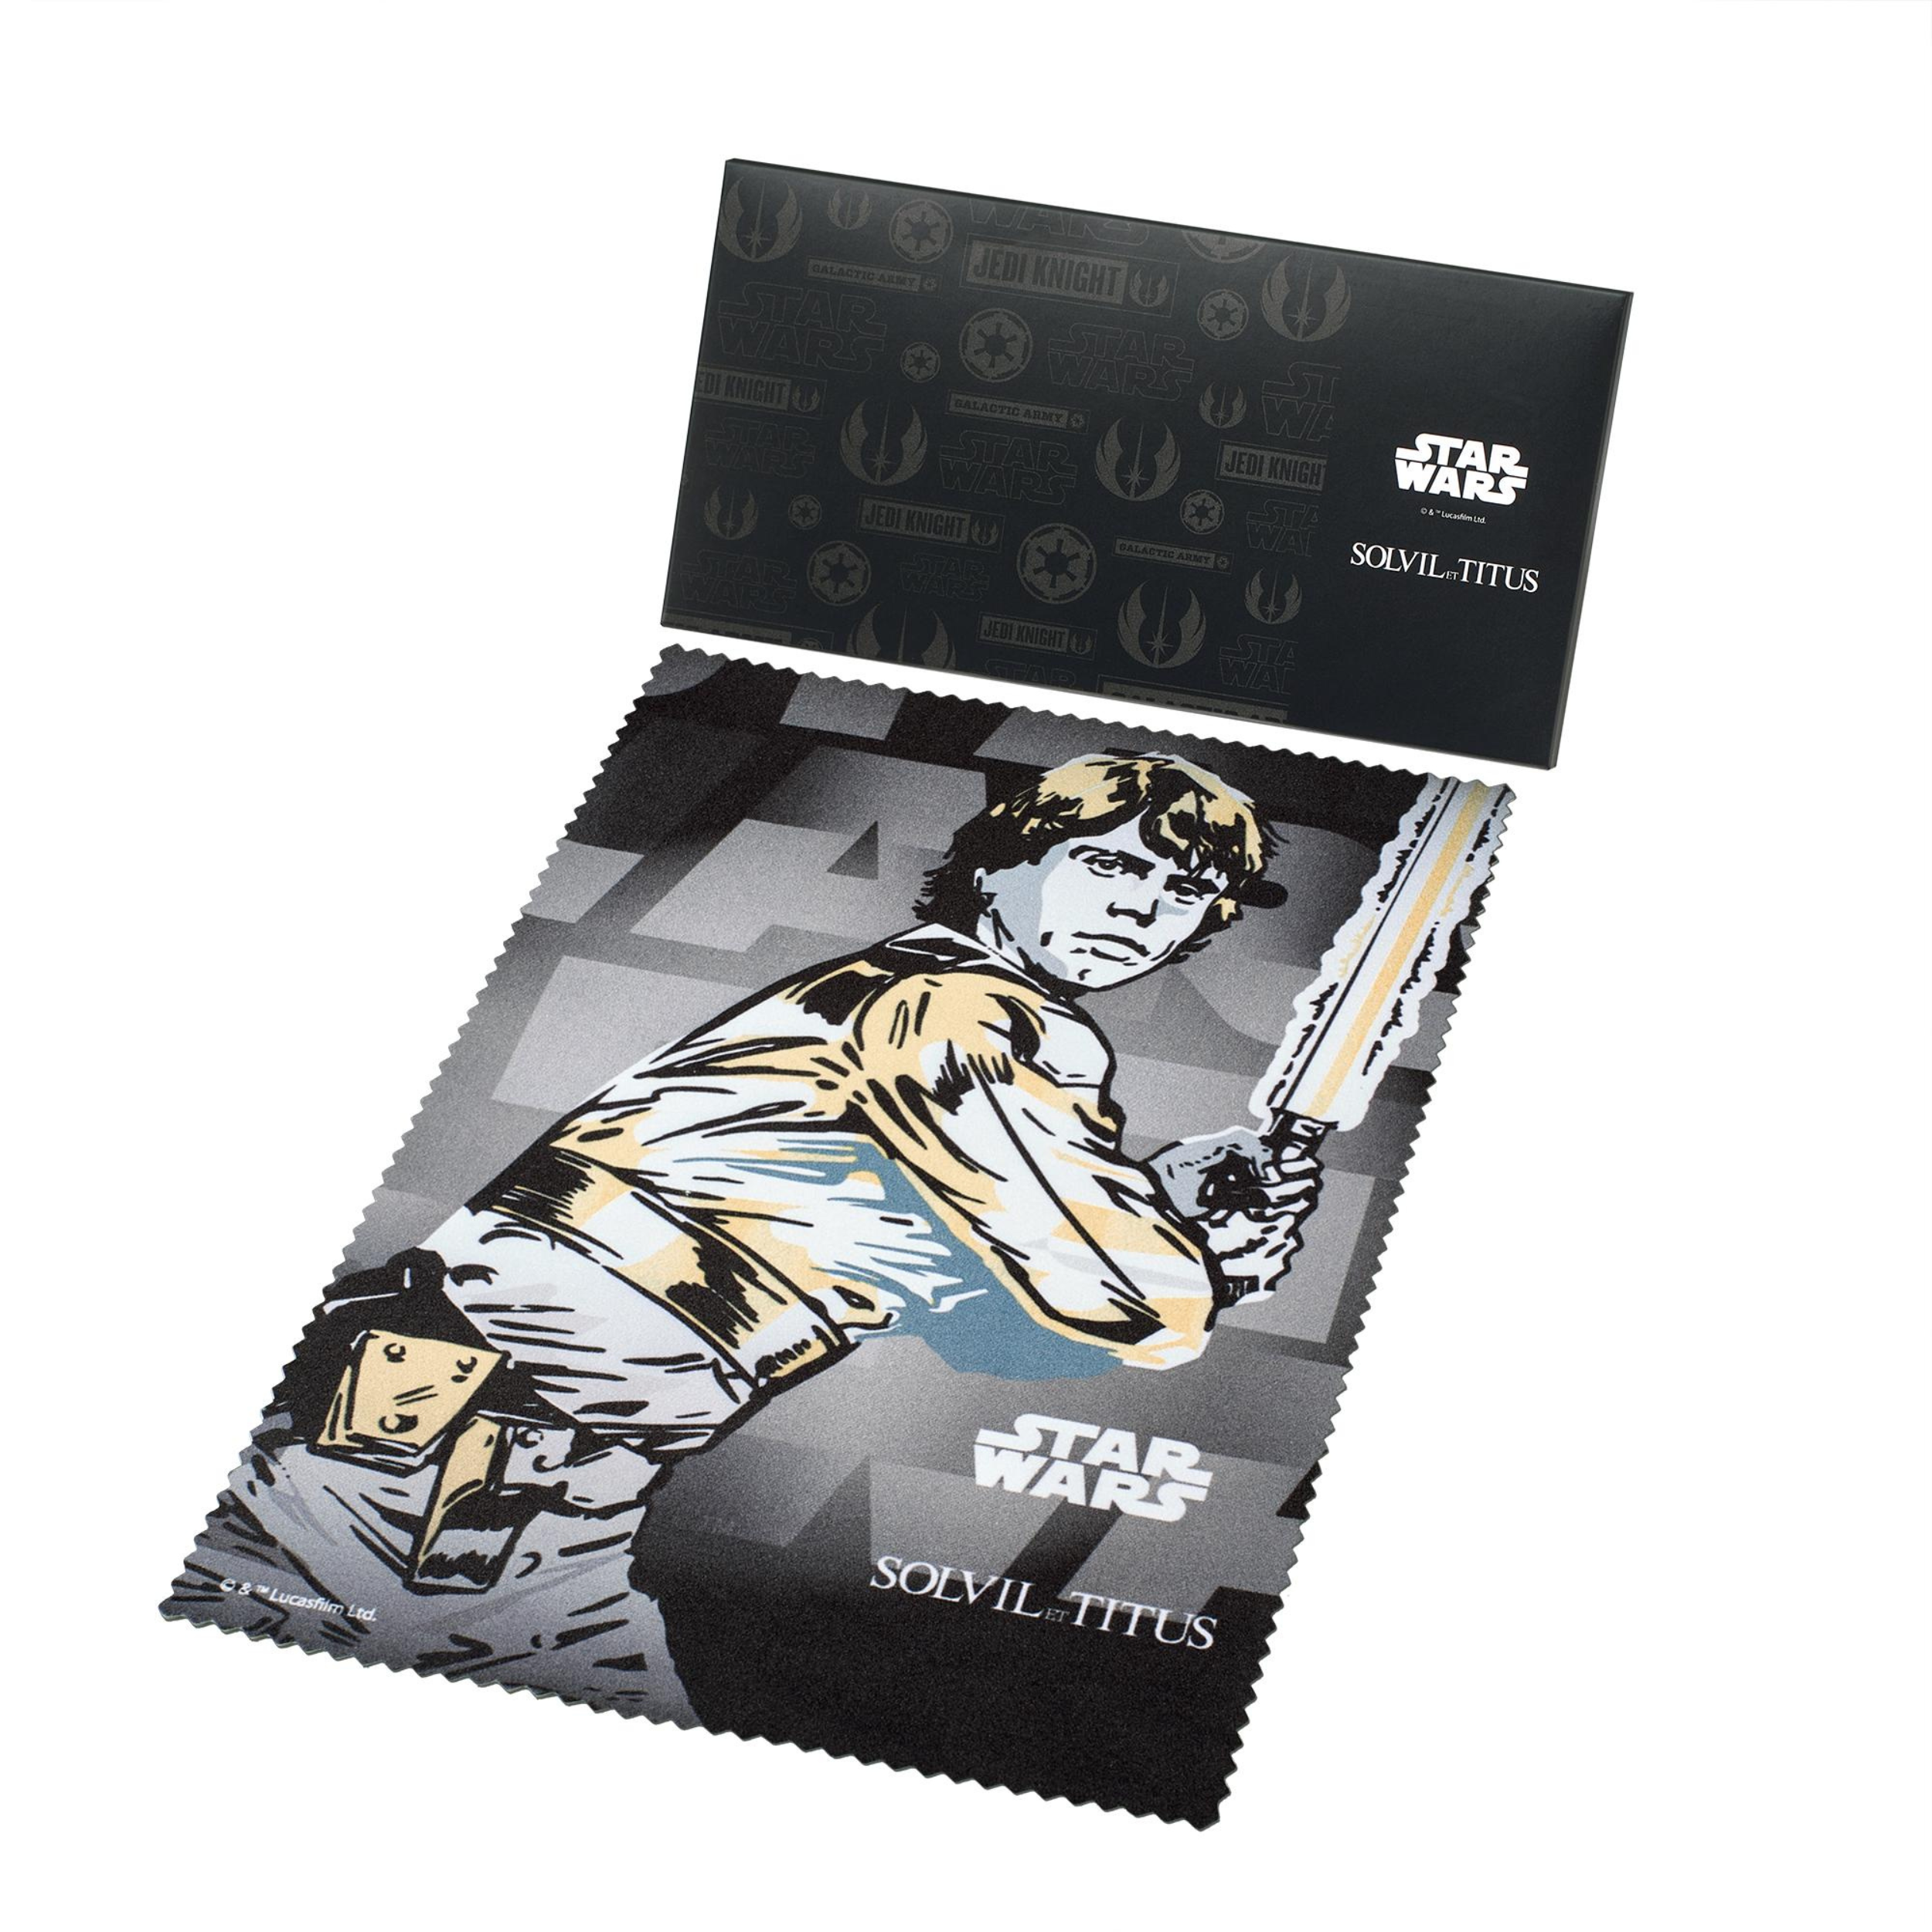 [Pre-Order] Solvil et Titus x Star Wars Limited Edition Saber "Luke Skywalker" Chronograph Watch W06-03365-005